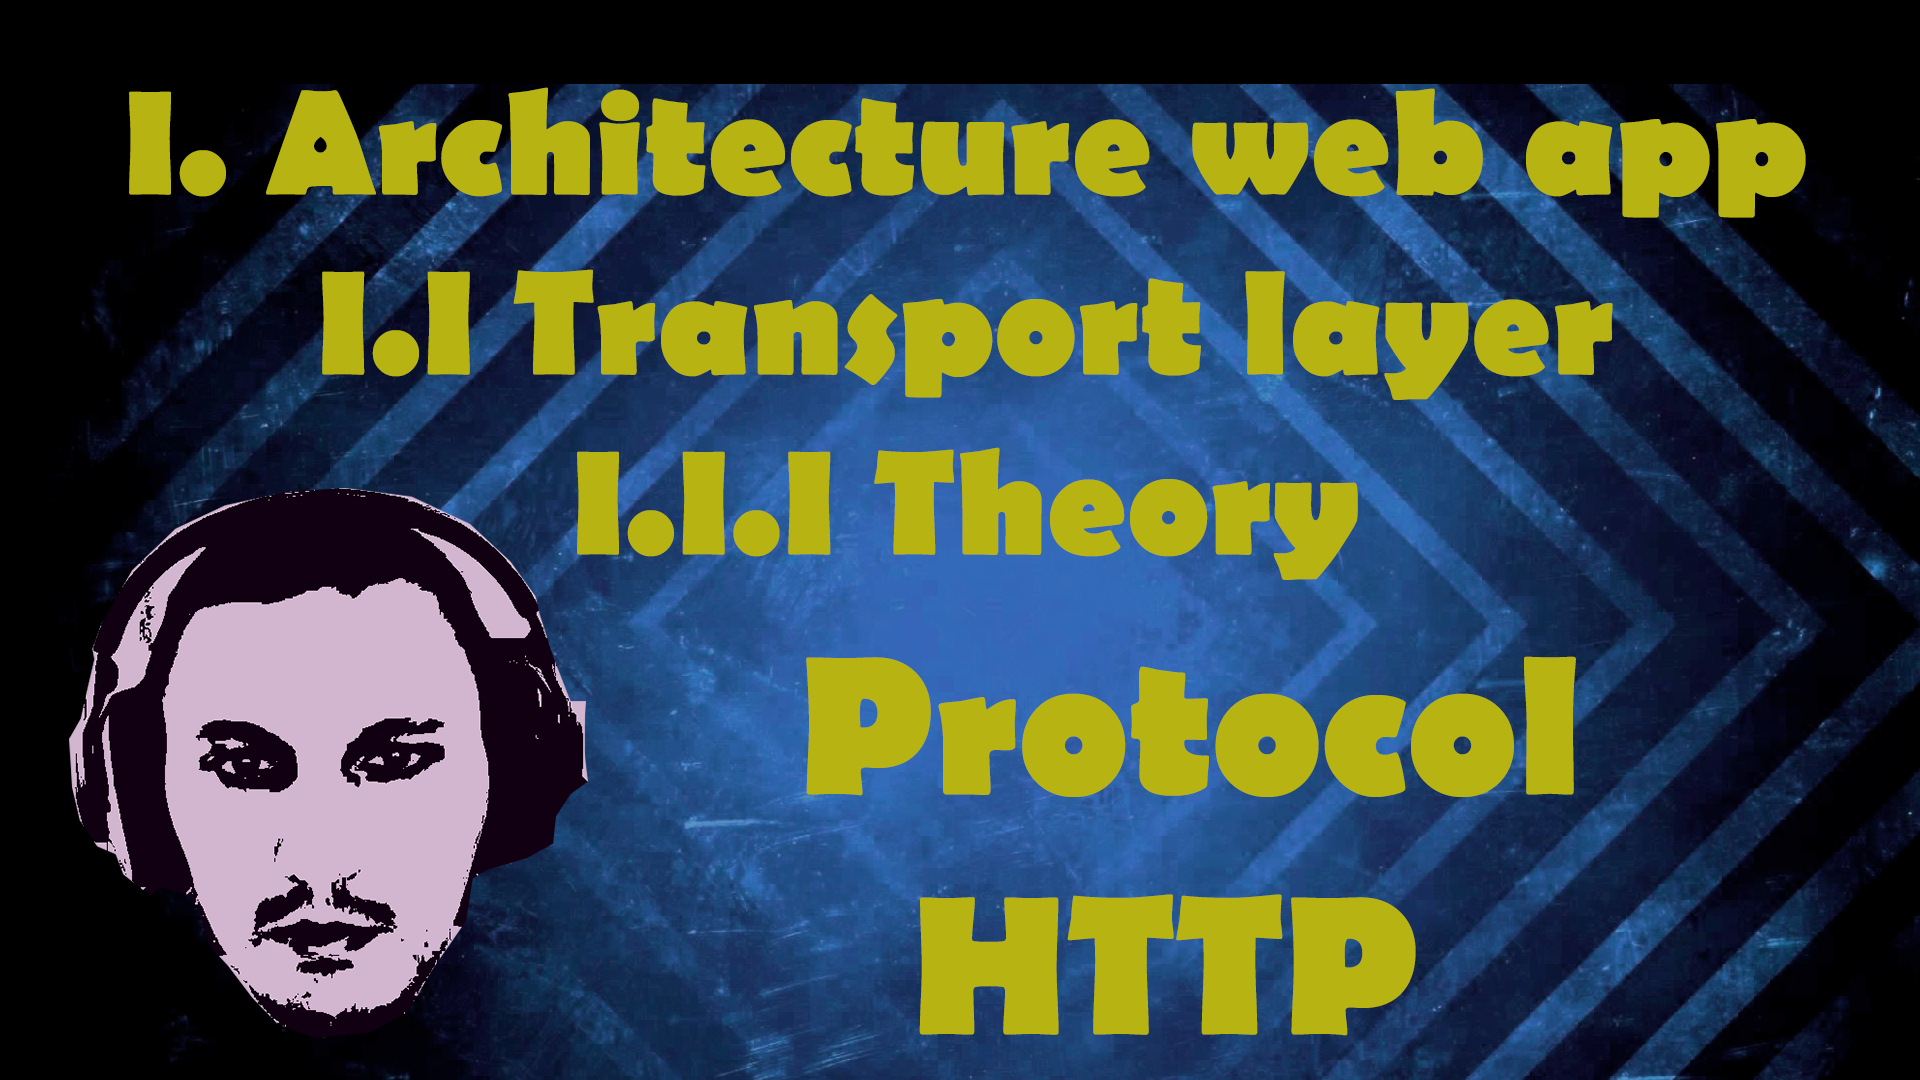 I. Architecture web app I.I Transport layer I.I.I Theory - Protocol. HTTP